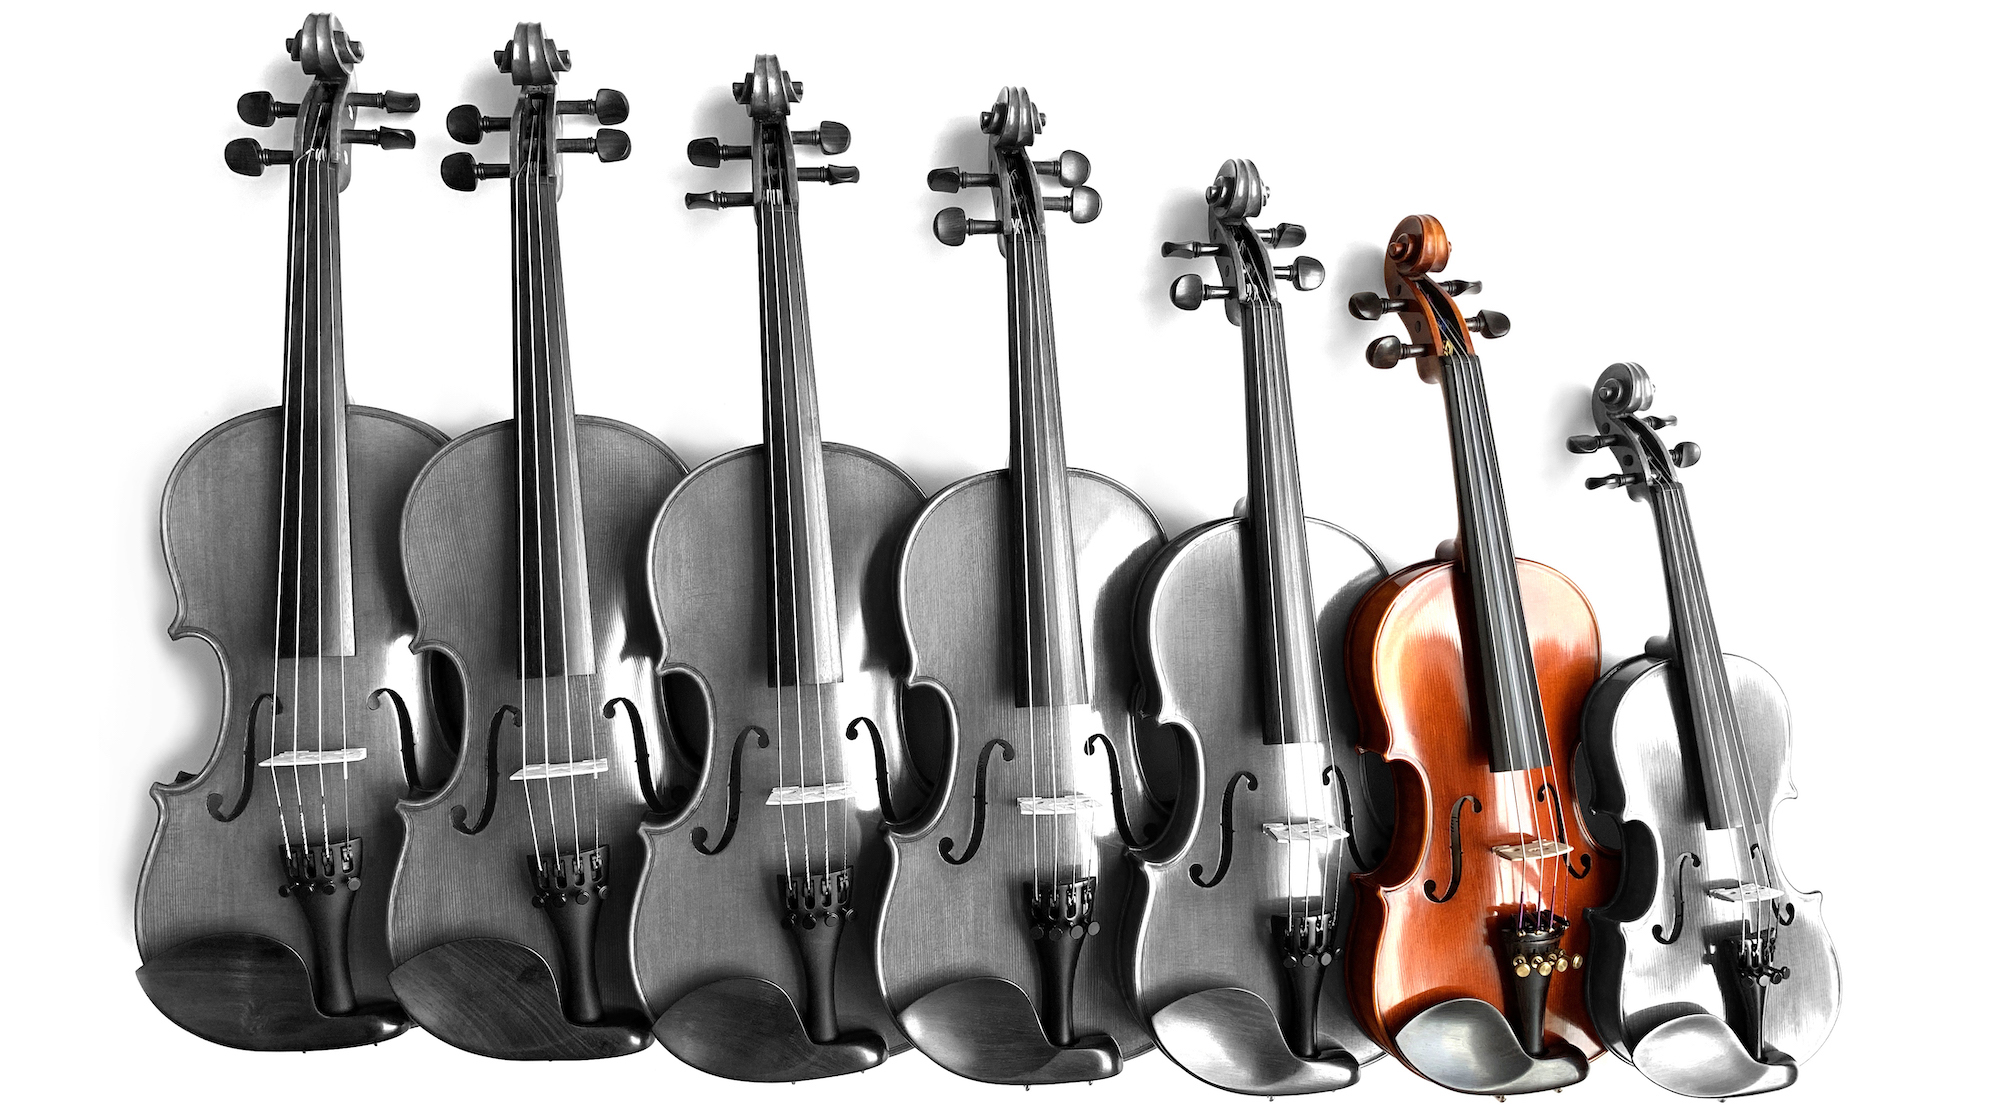 1/8 Size Violins - Fiddleheads - Award-Winning Shop Since 1997